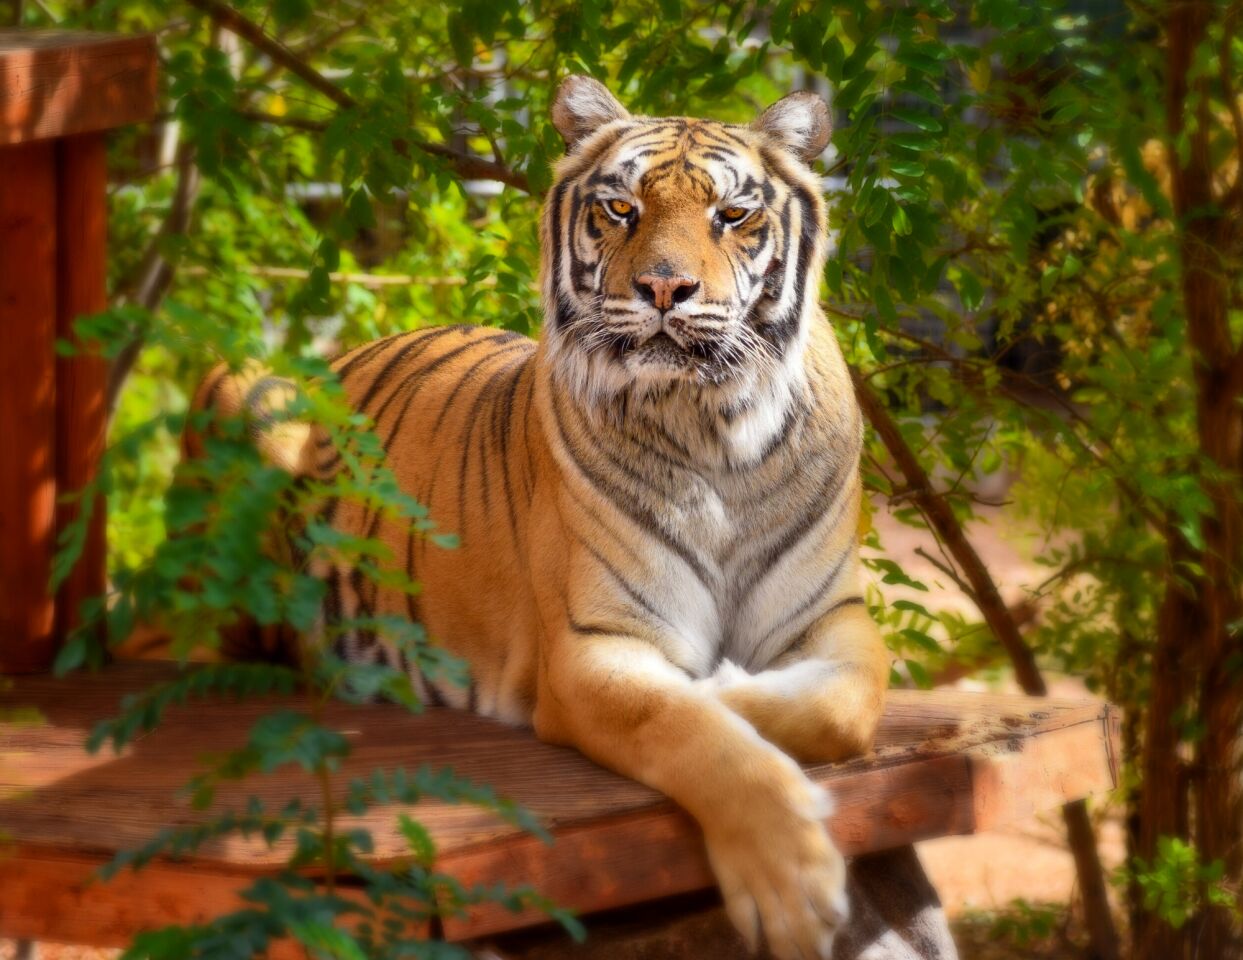 Ruckus the Bengal tiger